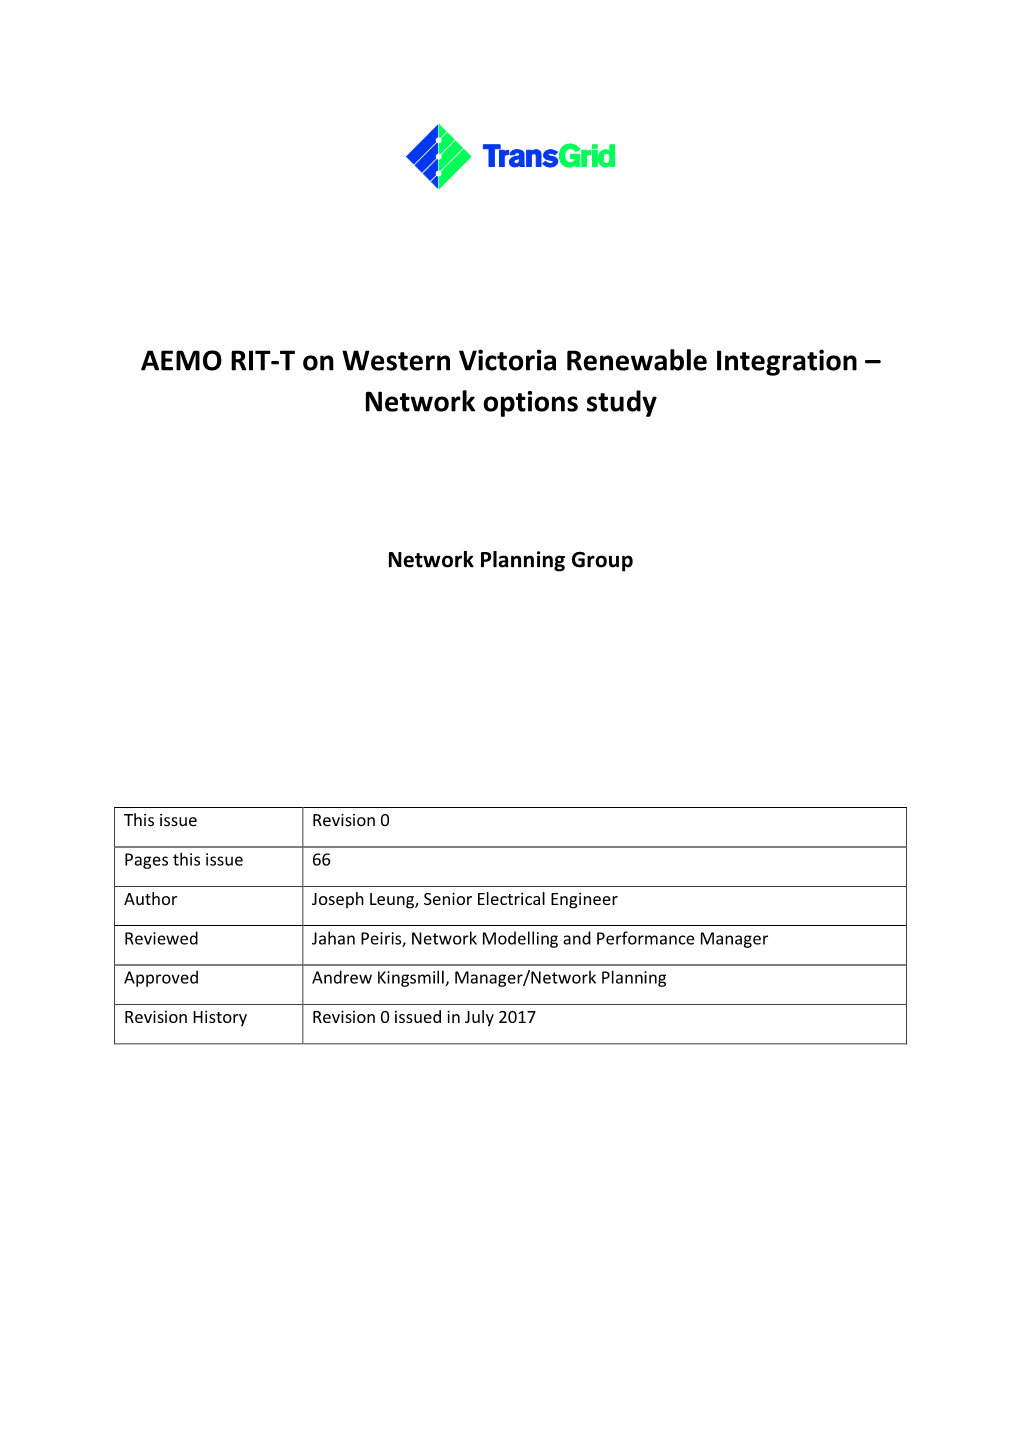 Network Options Study